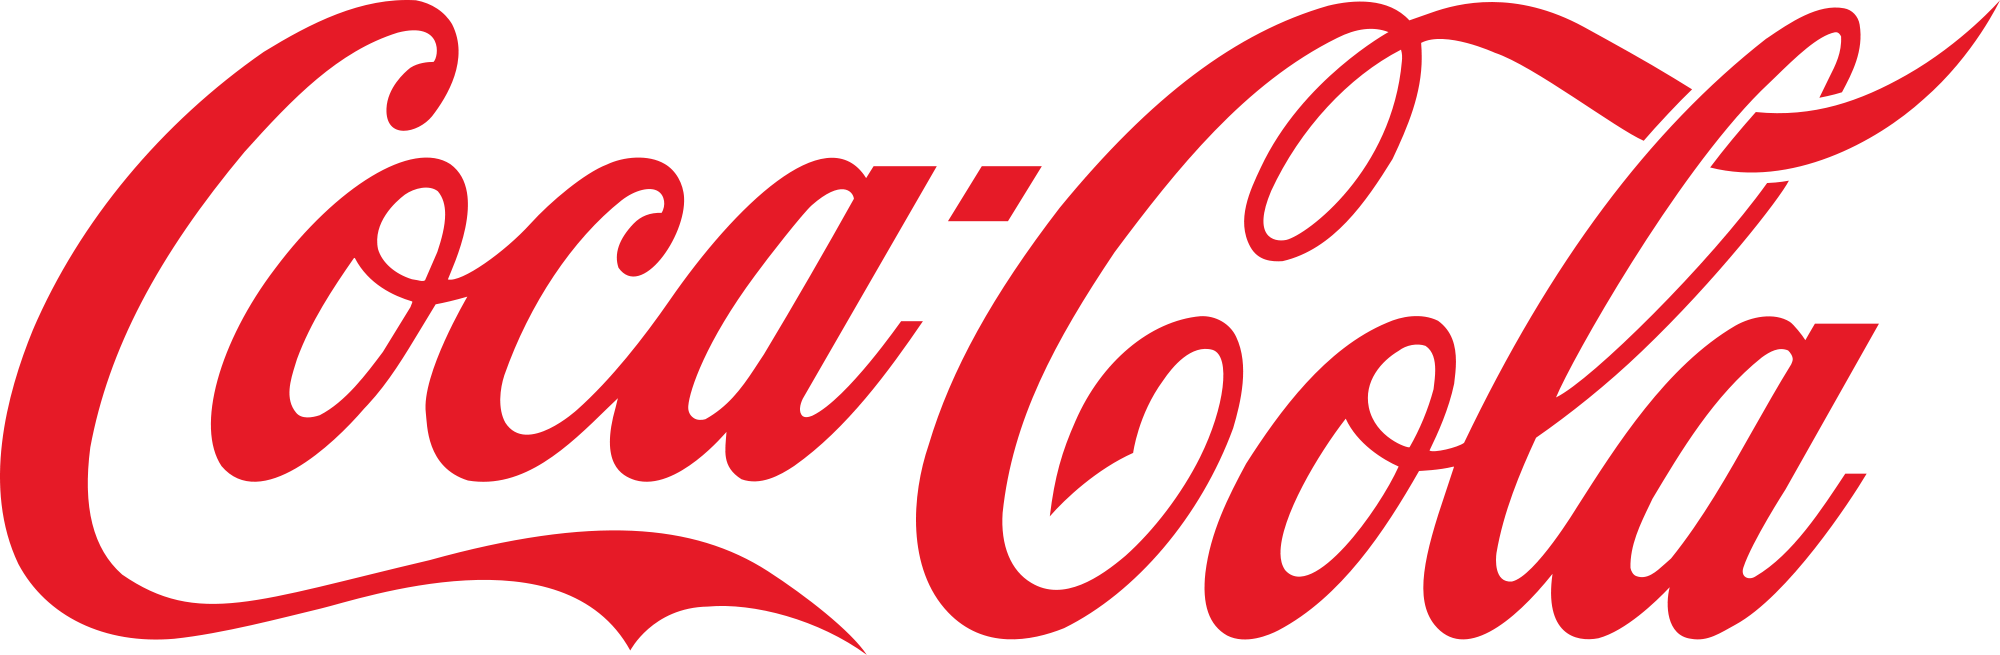 2000px-Coca-Cola logo.svg.png